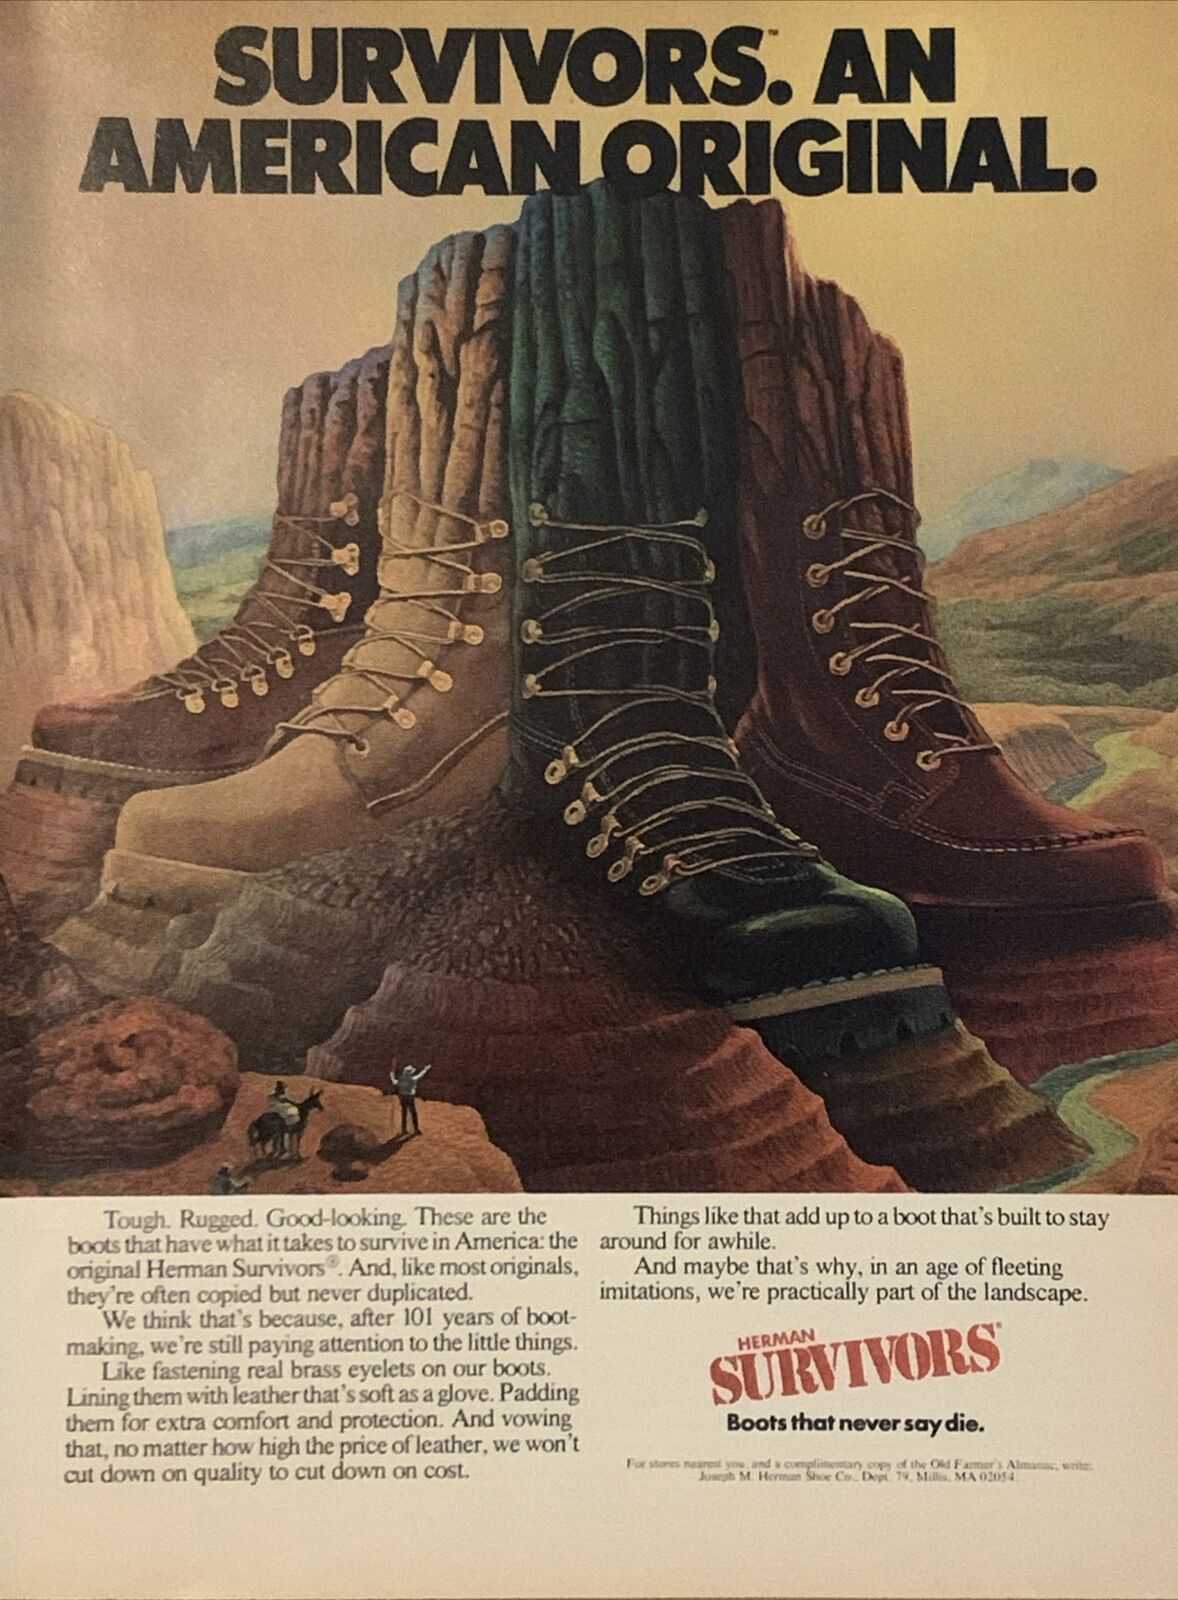 1979 Herman Survivors VTG 70s PRINT AD Boots Say Never Die - American Original